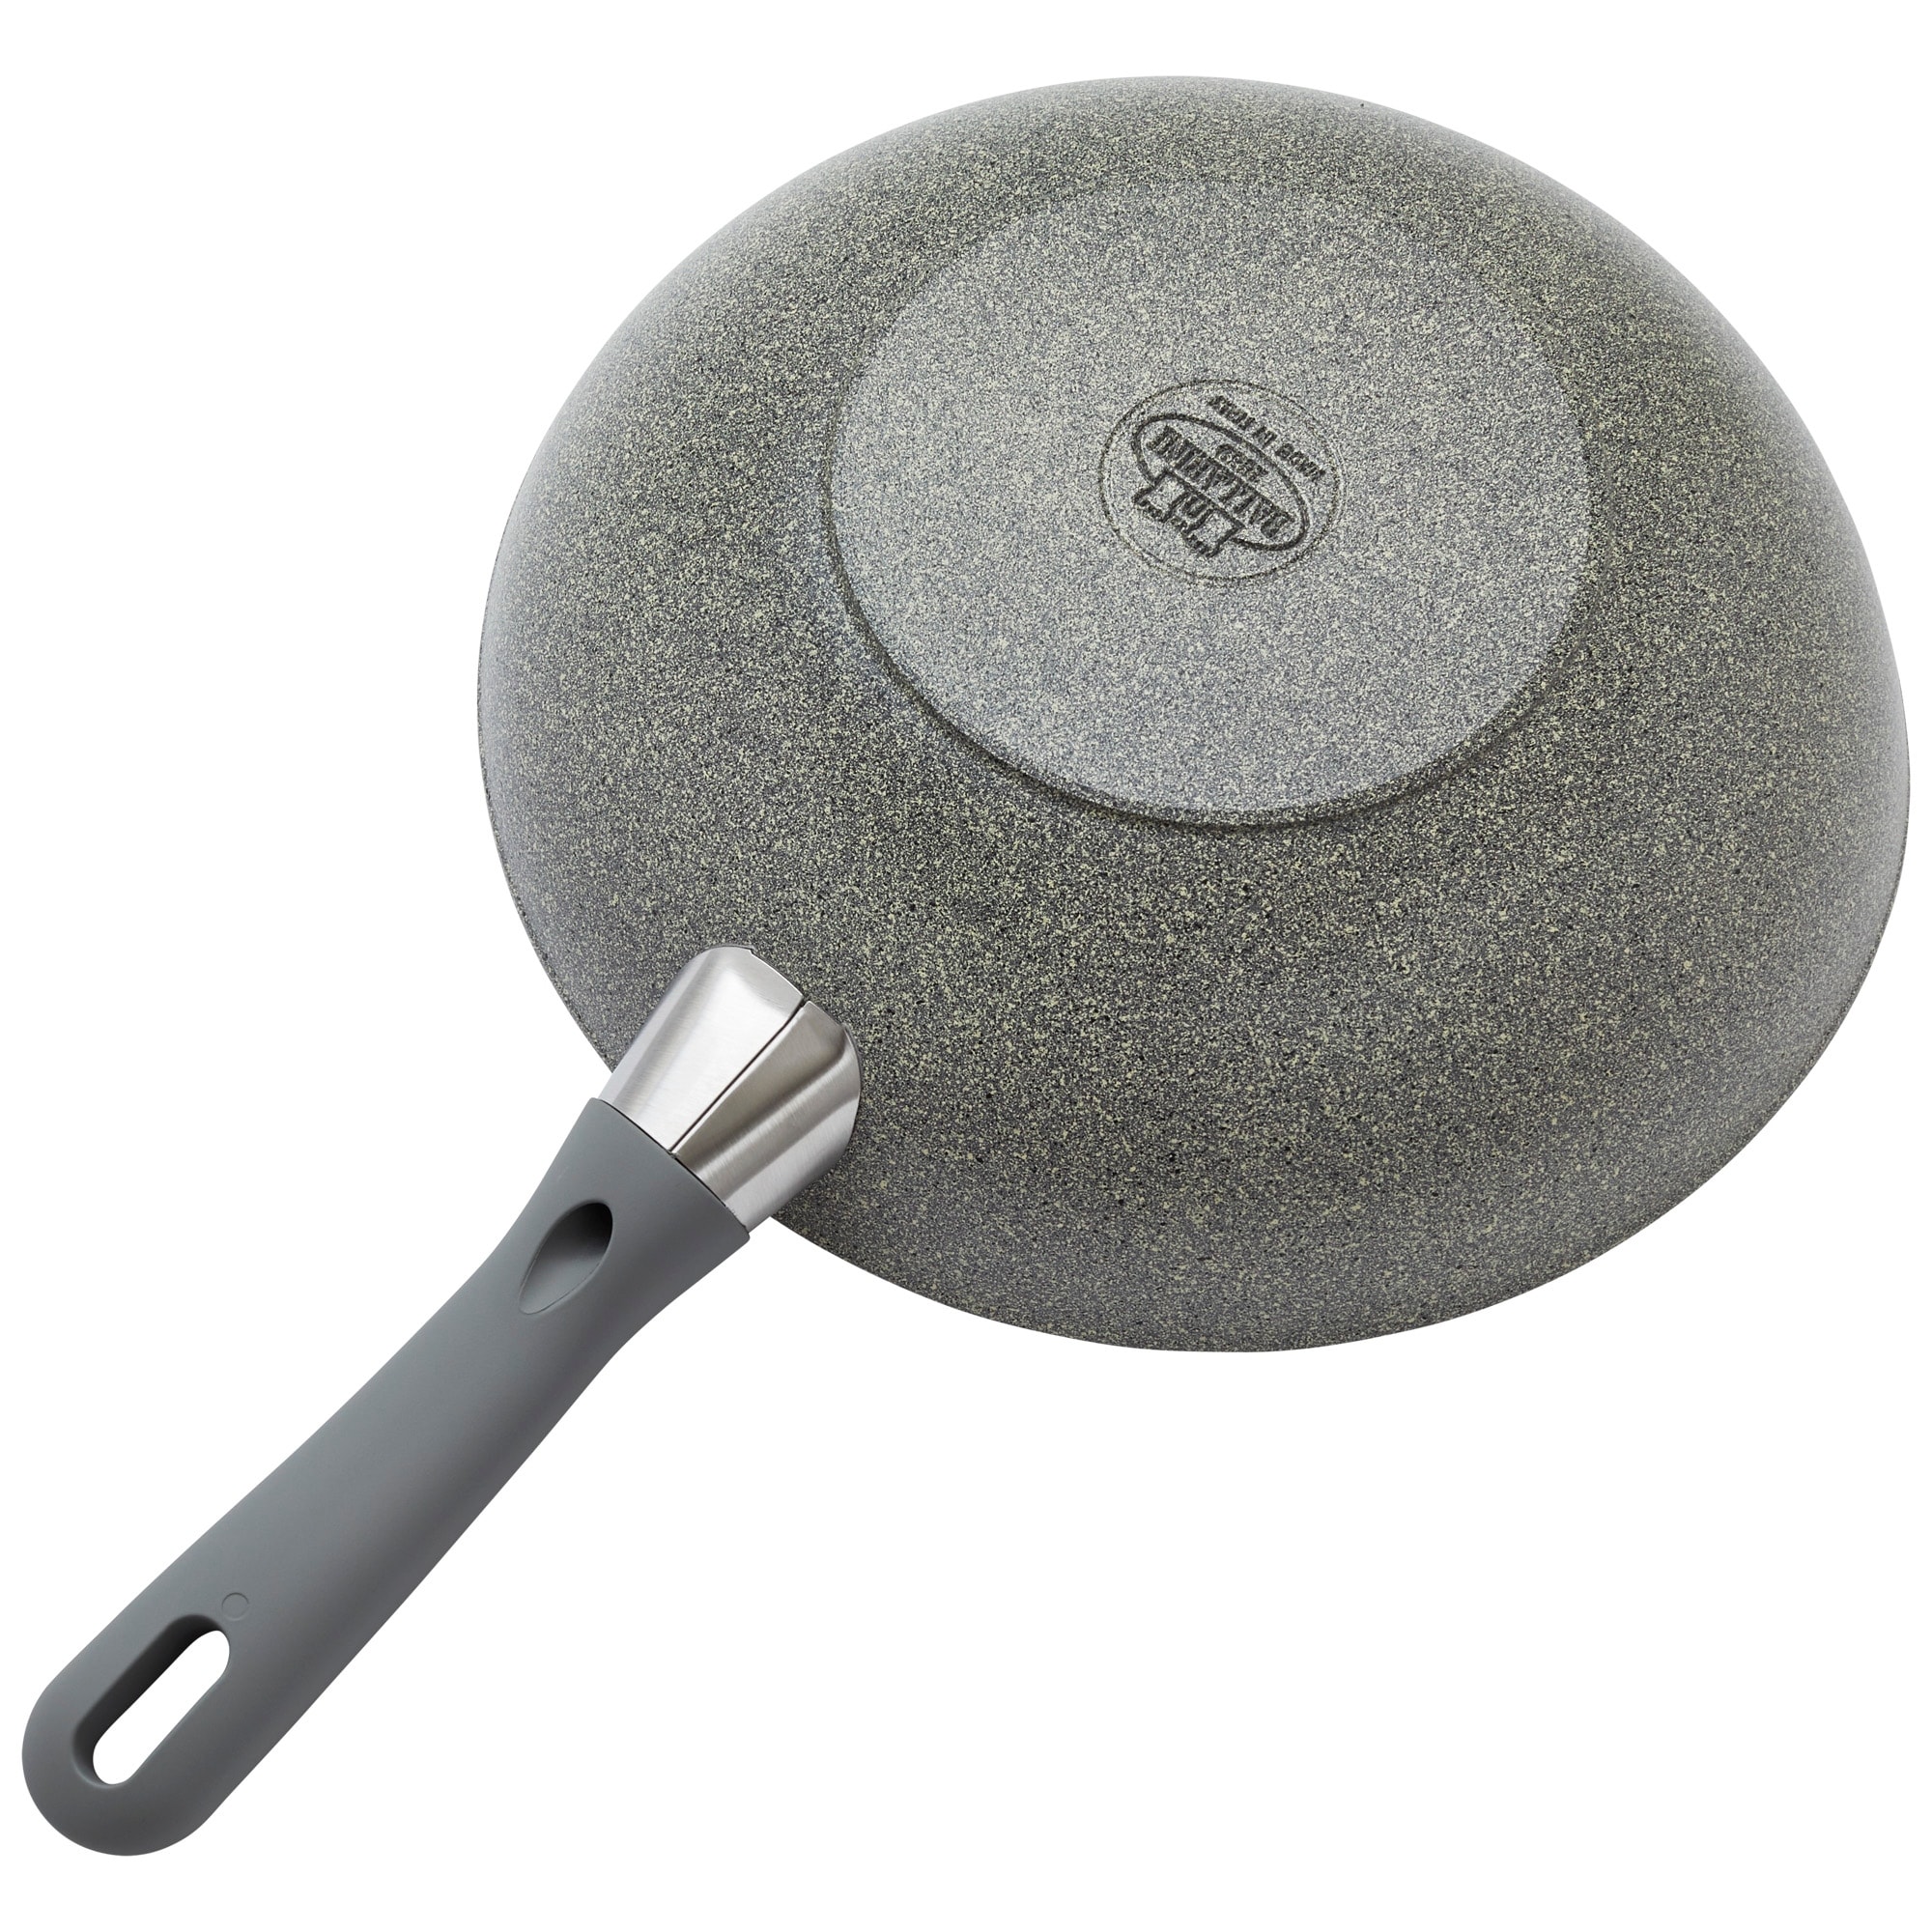 Ballarini Professionale Series 3000 11 Carbon Steel Fry Pan 